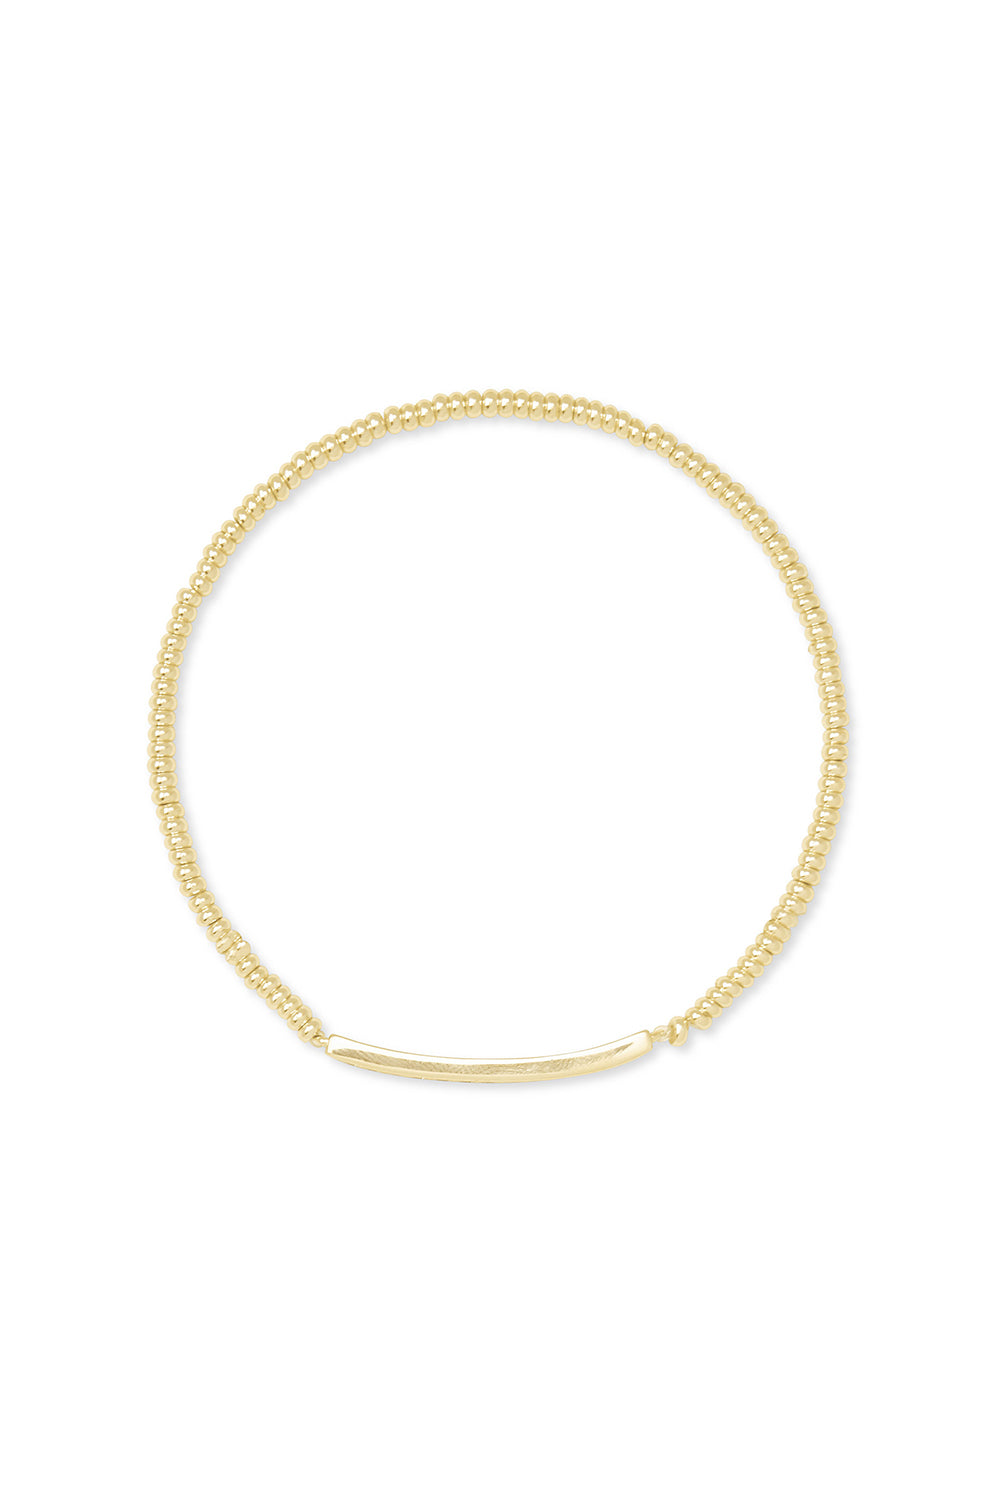 Kendra Scott: Addison Stretch Bracelet - Gold | Makk Fashions